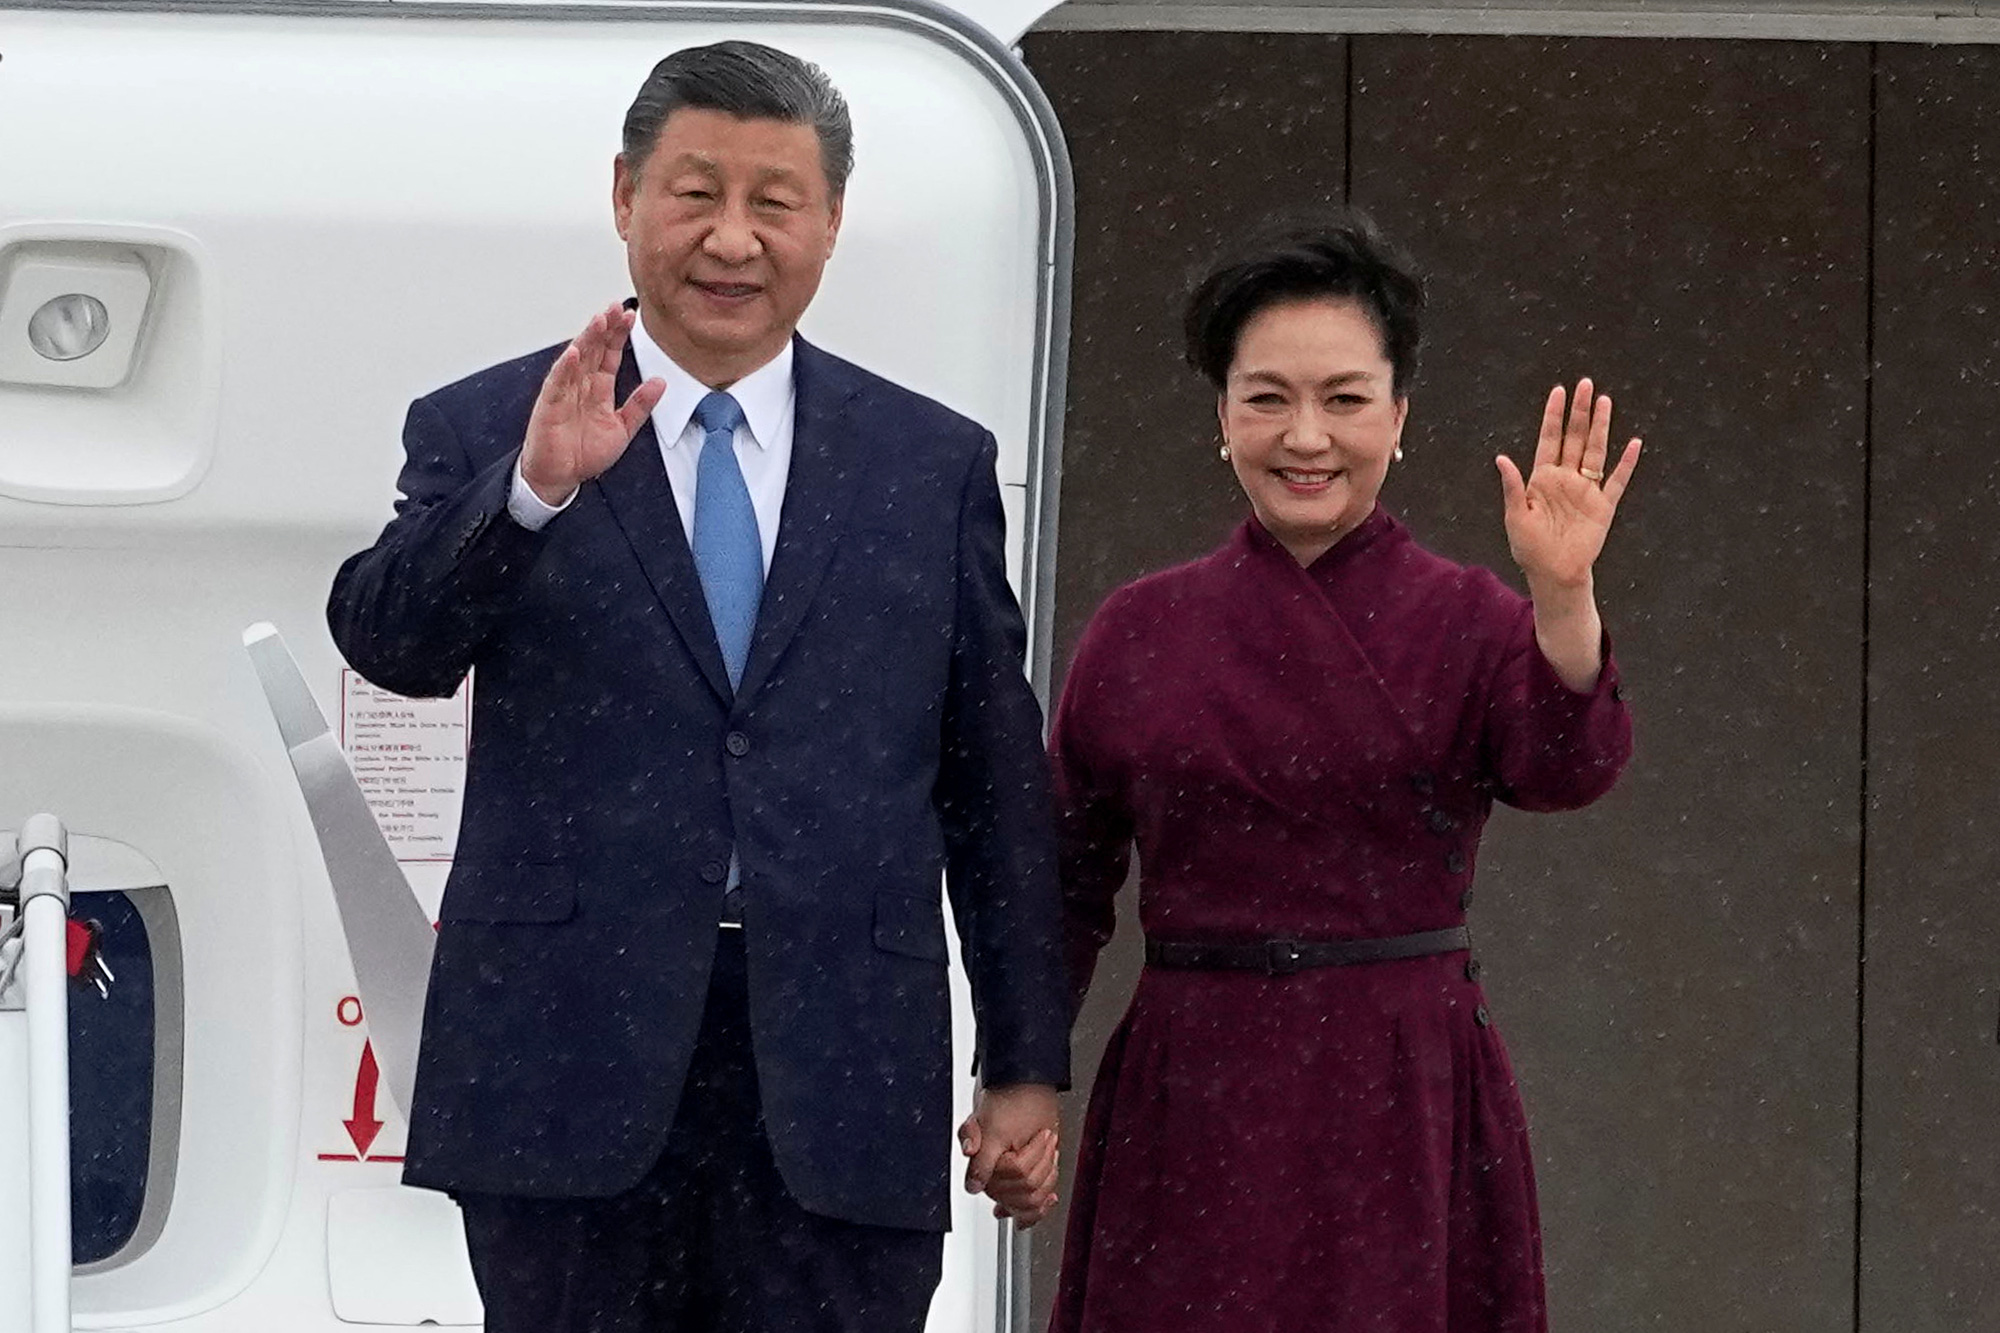 Herr.  Xi Jinping mit seiner Frau Peng Liyuan - Foto: REUTERS